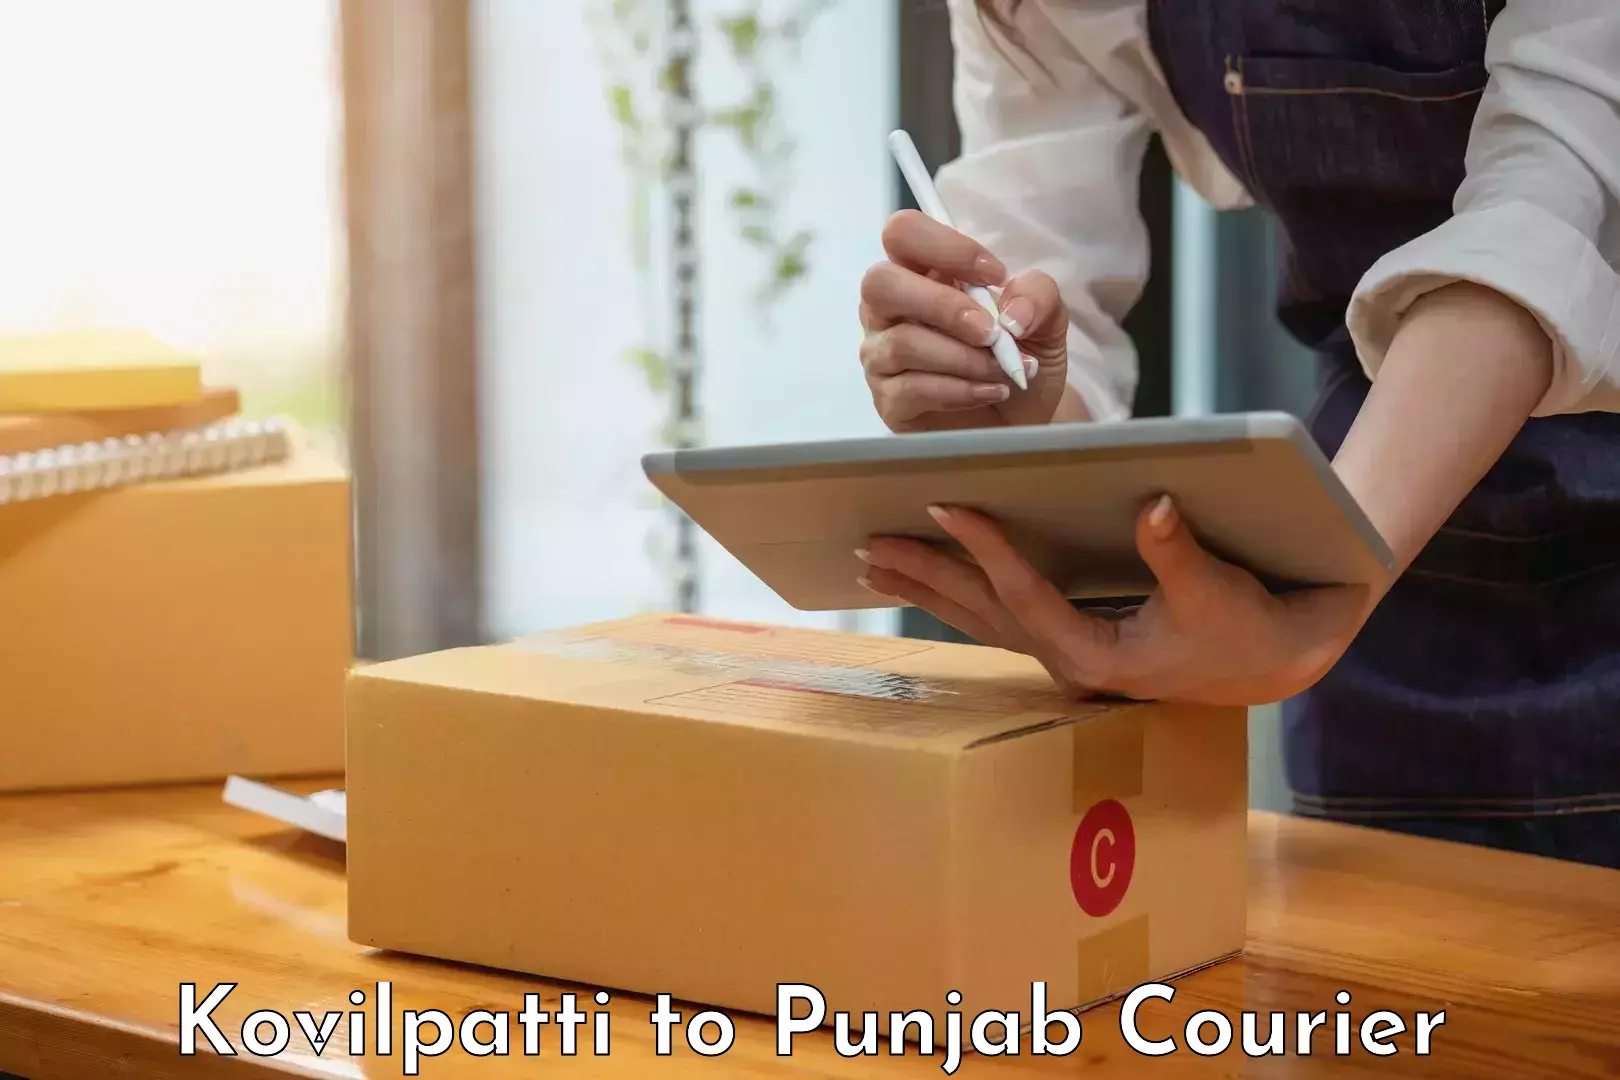 Local delivery service Kovilpatti to Punjab